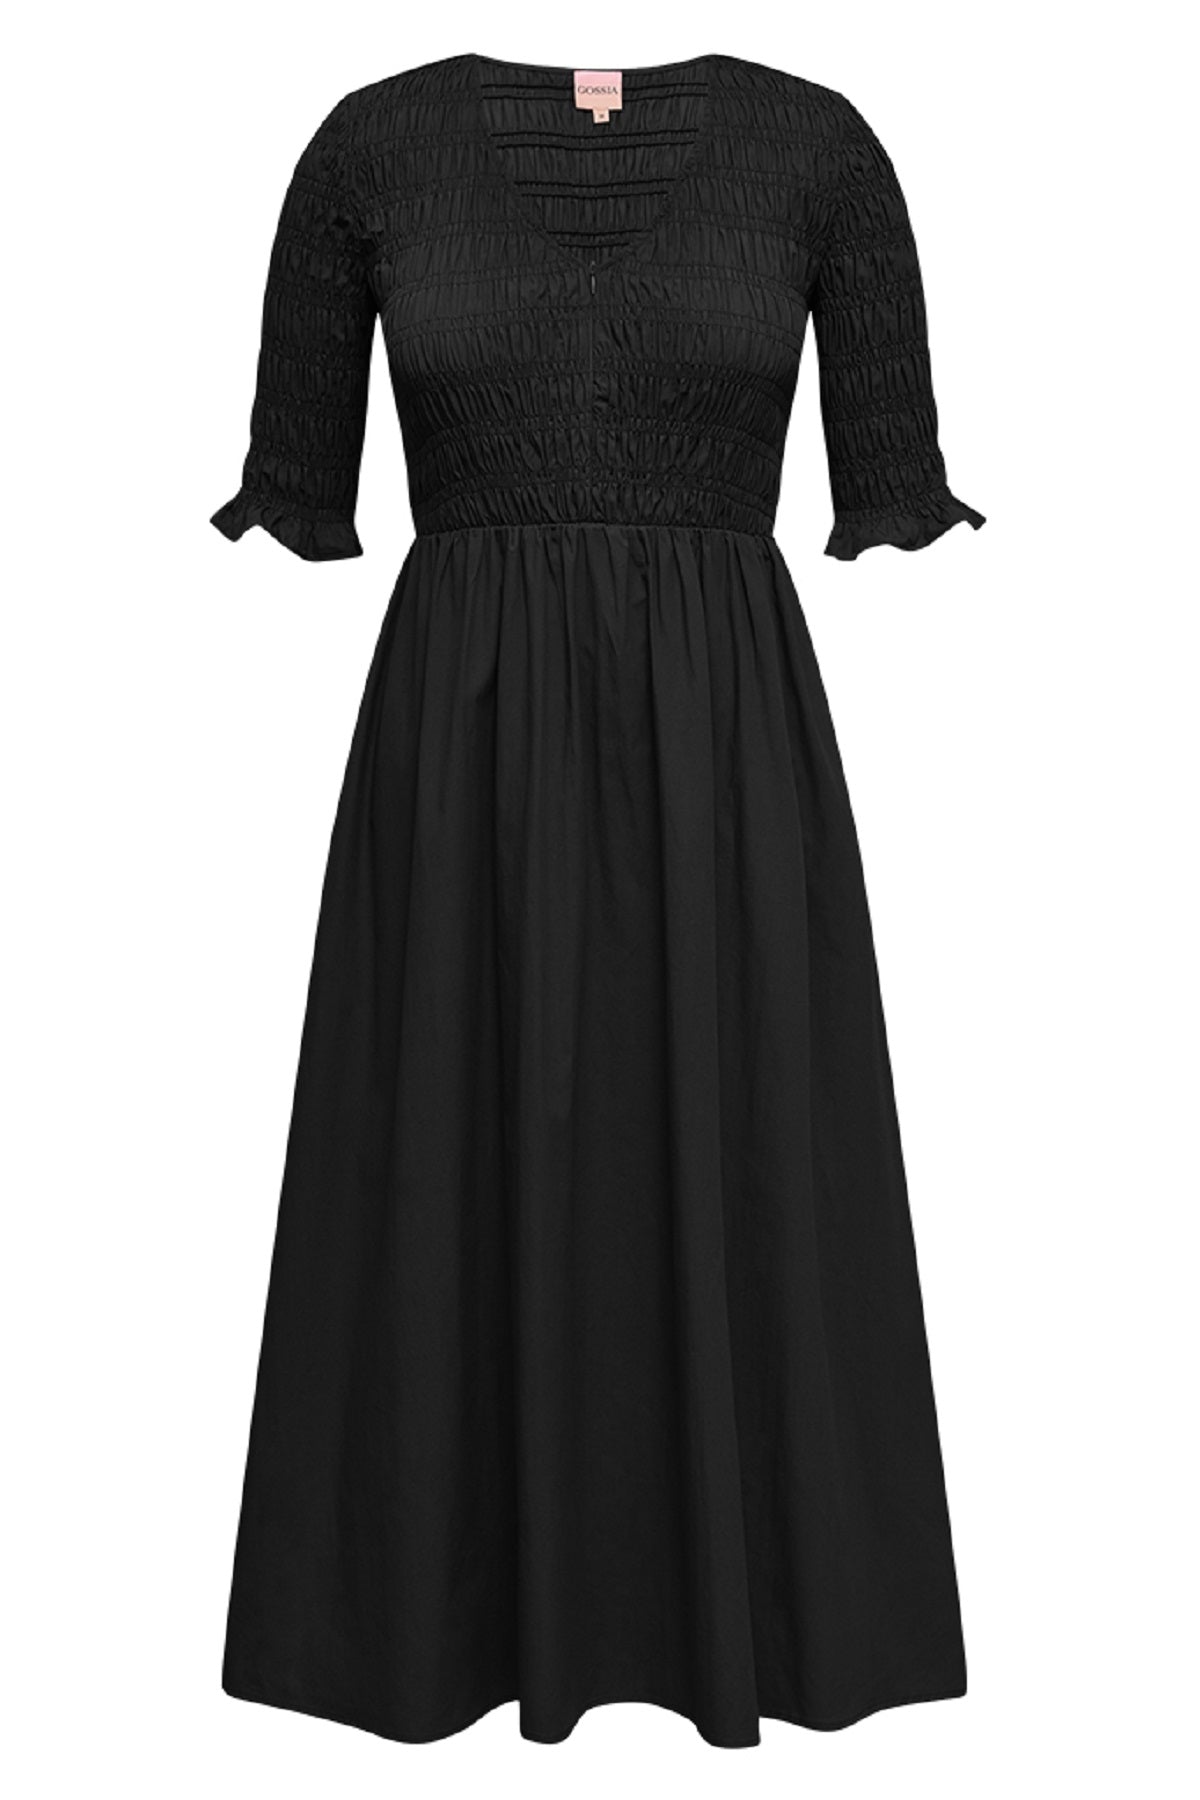 Gossia AinaGO Dress, Black